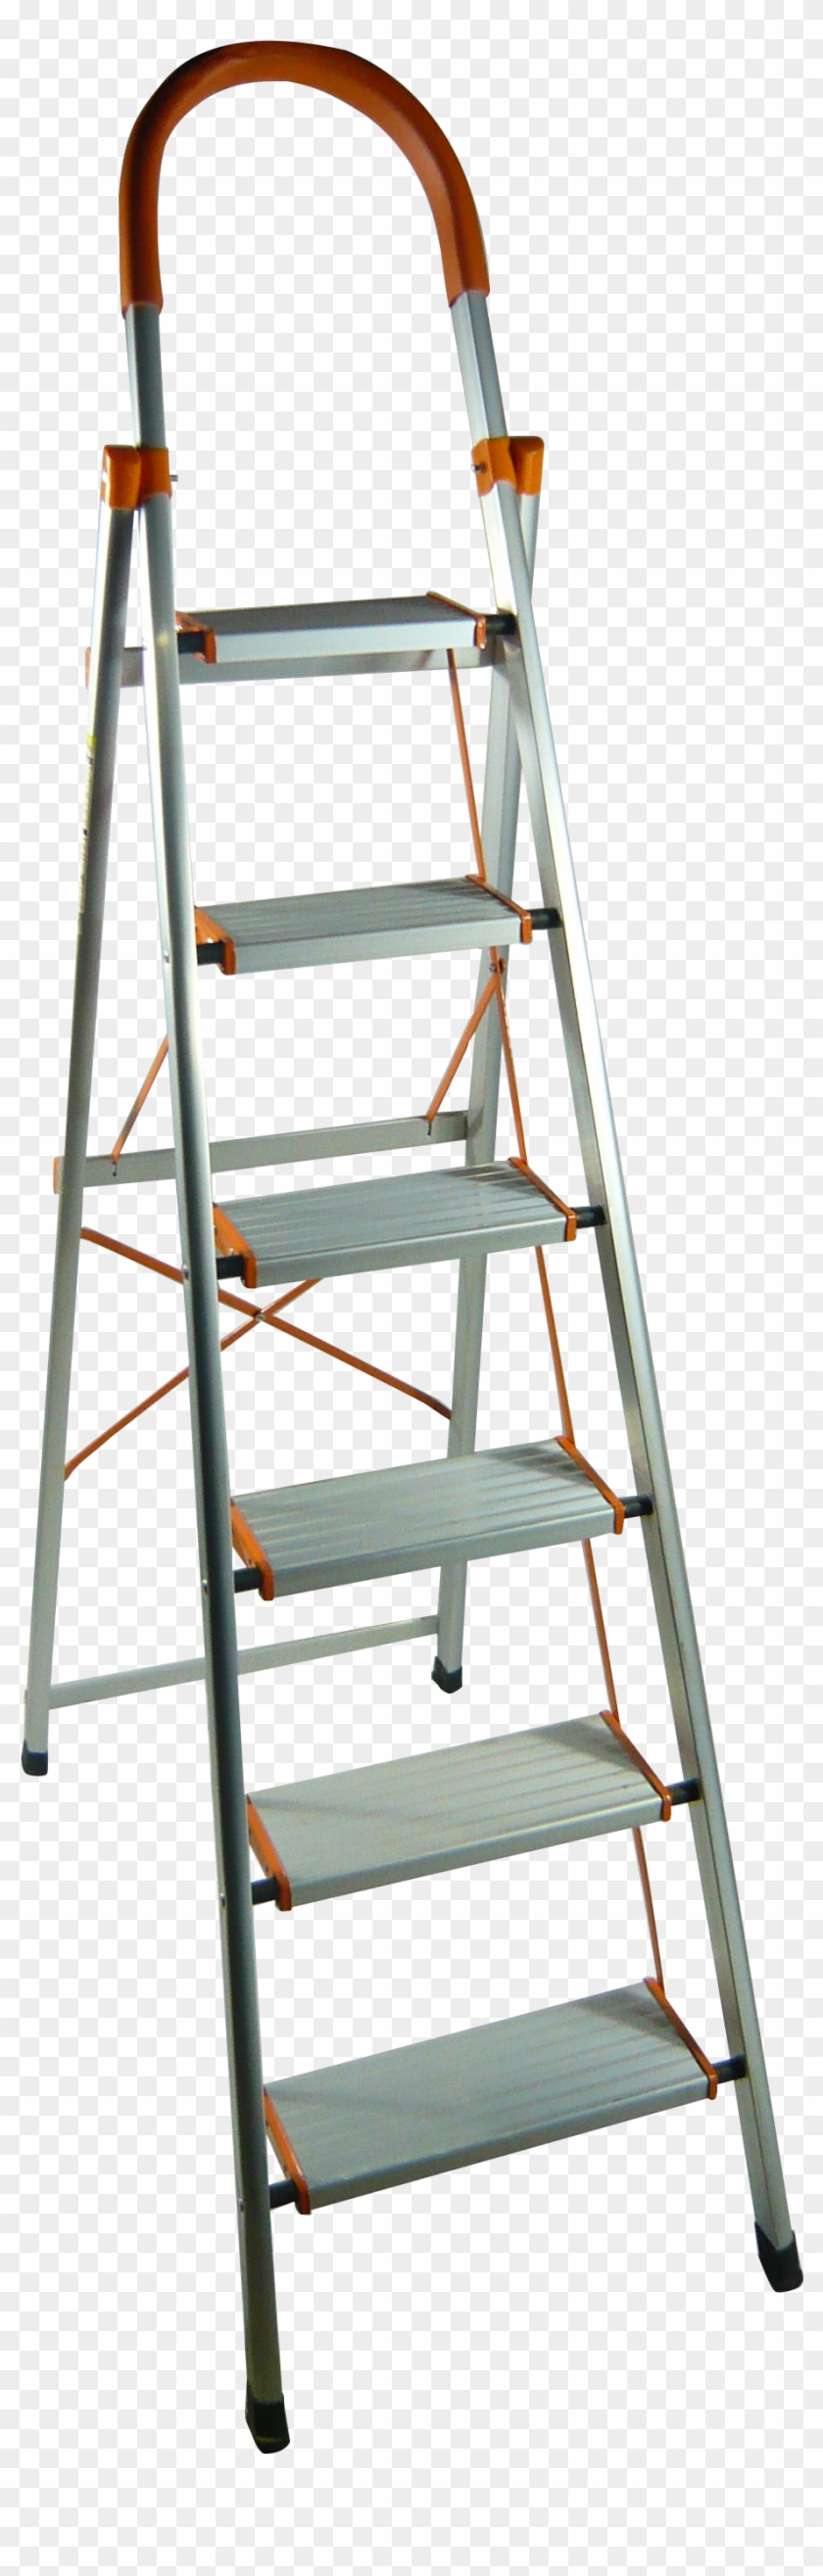 Ladder Stairs Clip Art - Shelf #1095898